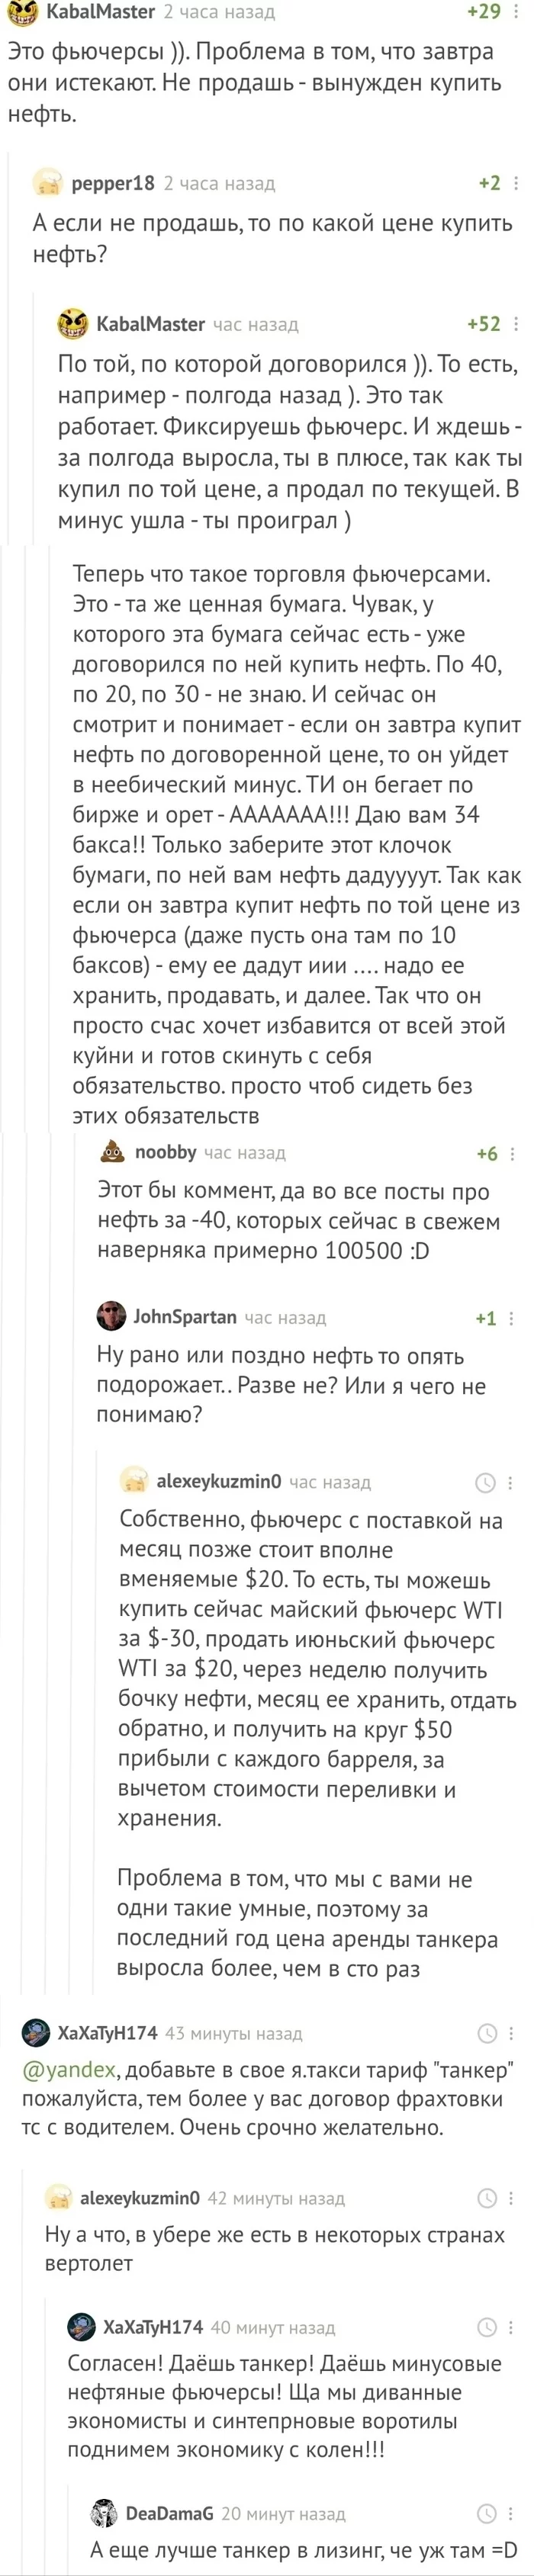 Let's all go to the market! Stock! - Stock market, Yandex Taxi, Clarification, Longpost, Comments on Peekaboo, Screenshot